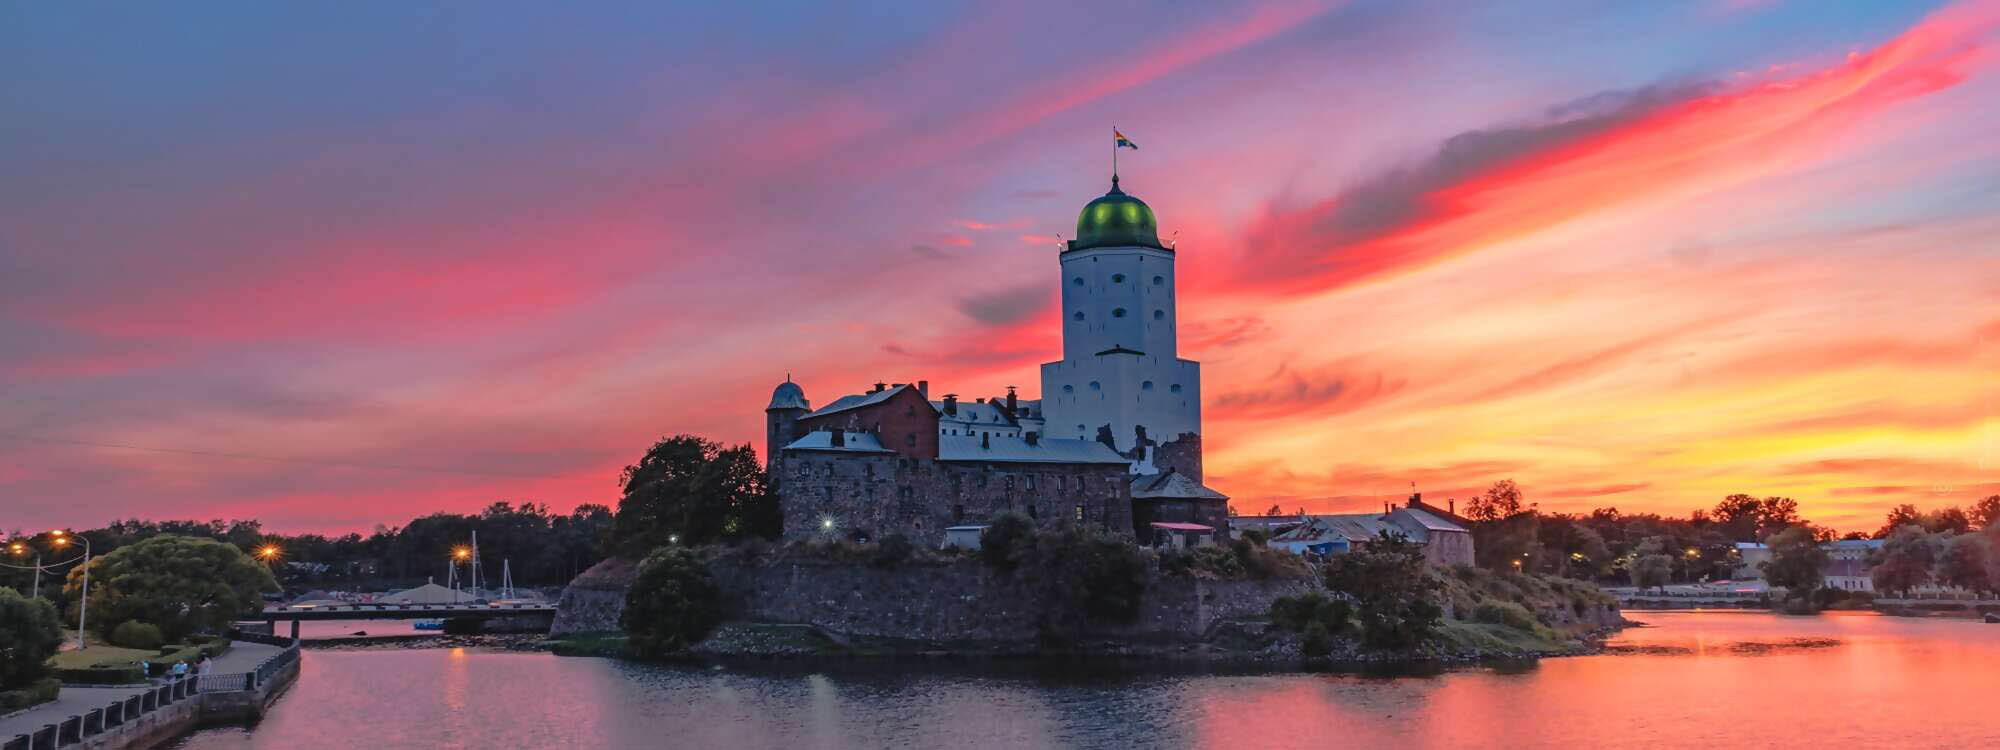 Die Festung Medieval mit dem Sankt Olav Turm aus dem 13. Jahrhundert - Finnland